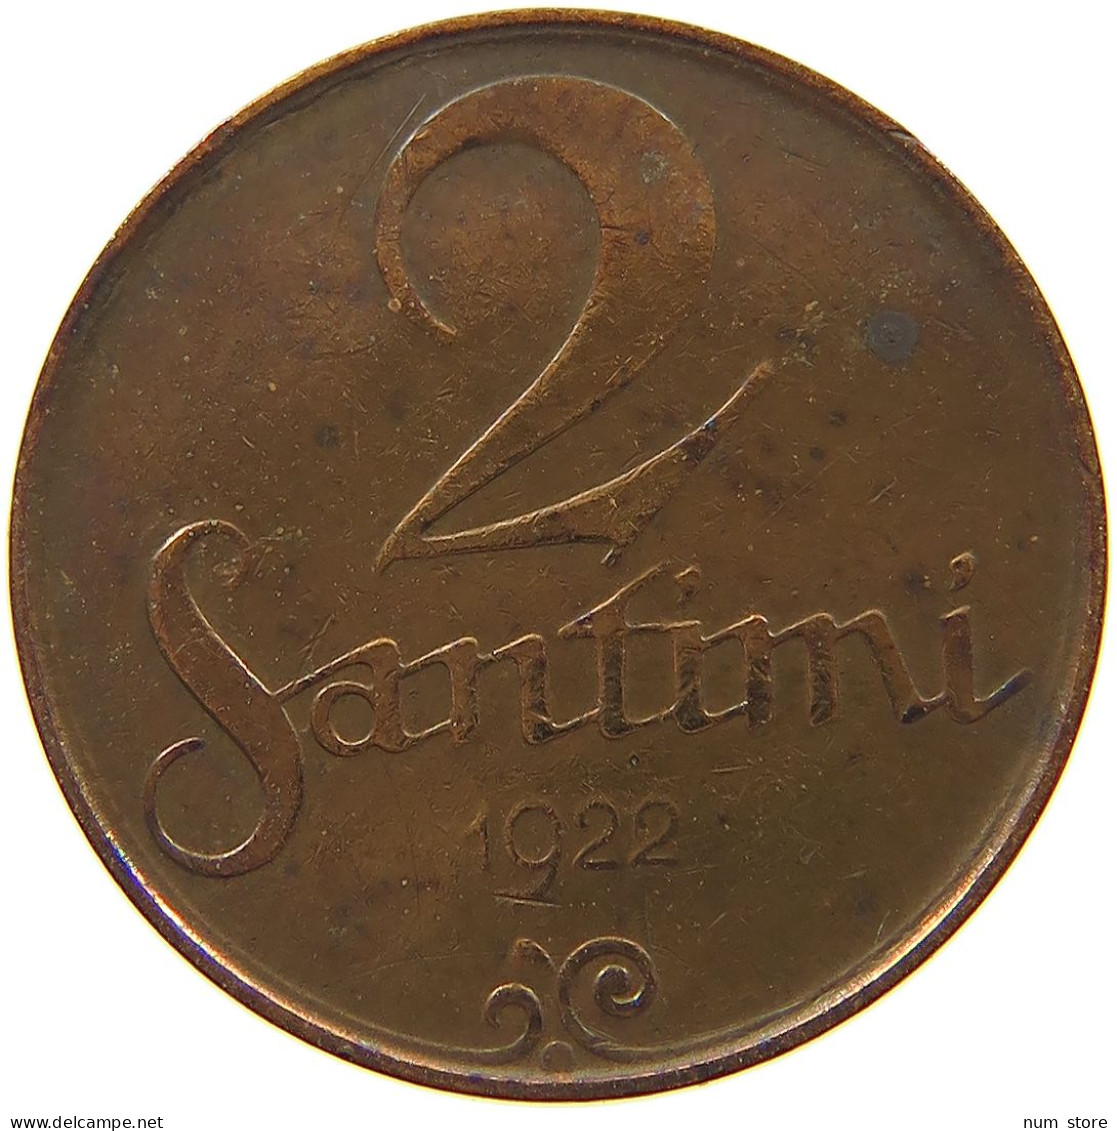 LATVIA 2 SANTIMI 1922  #a085 0707 - Latvia